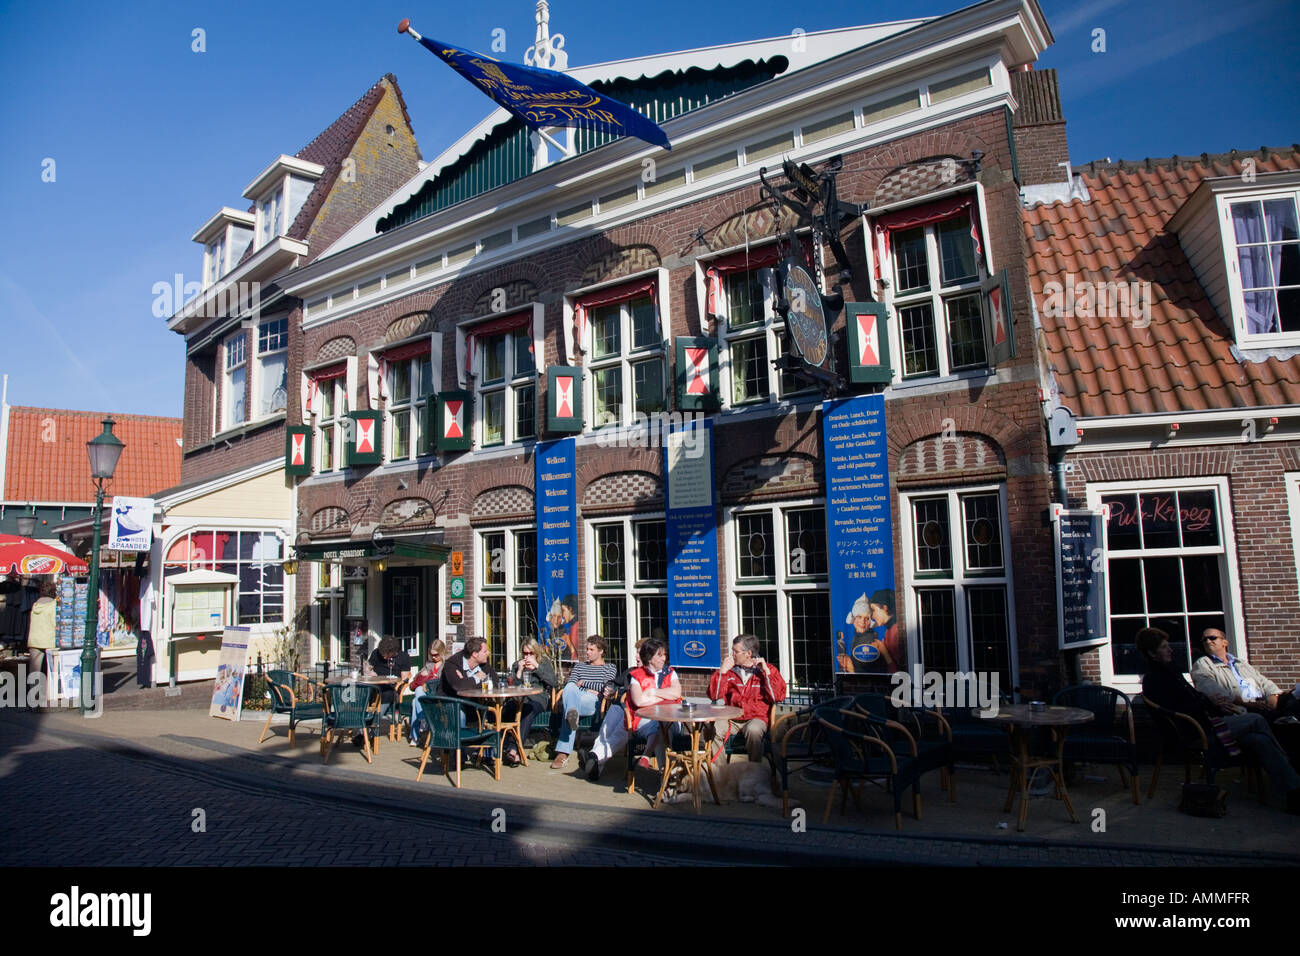 Outdoor Café in Europe Vollendam Dutch Holland Netherlands noord noordsea Benelux quaint fishing village fishing Stock Photo